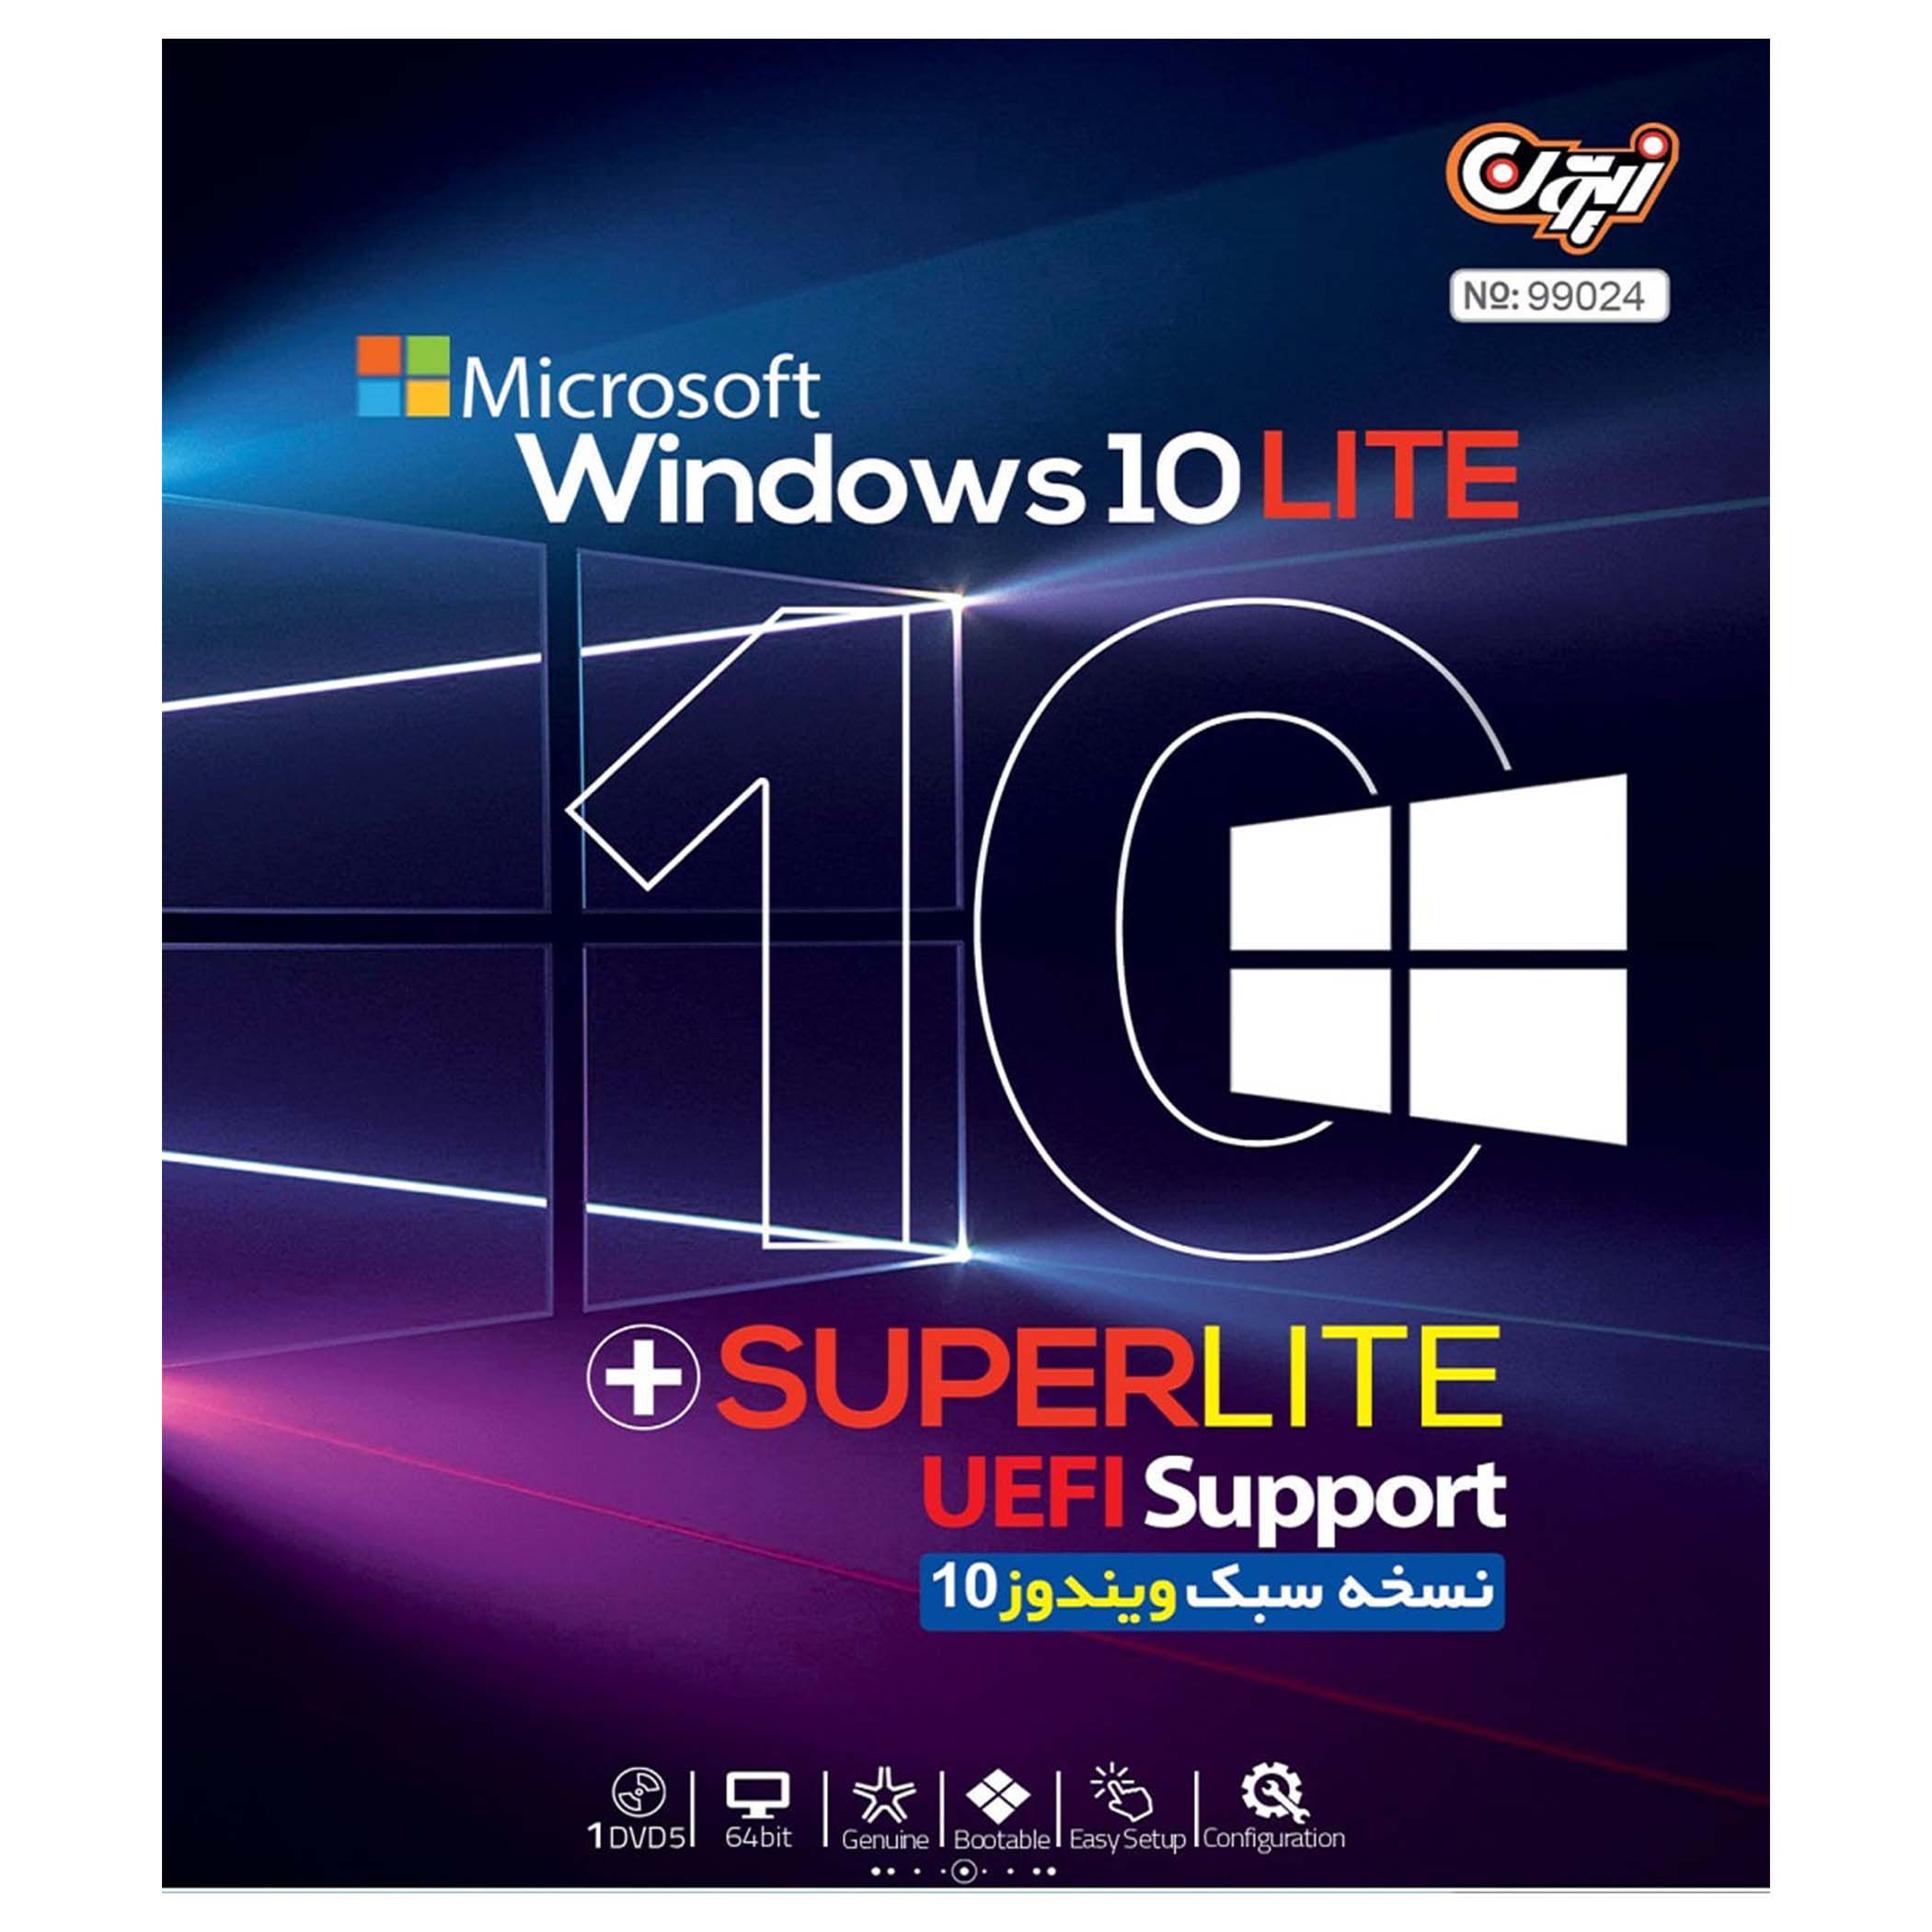 سیستم عامل windows 10 lite uefi support نشر زیتون